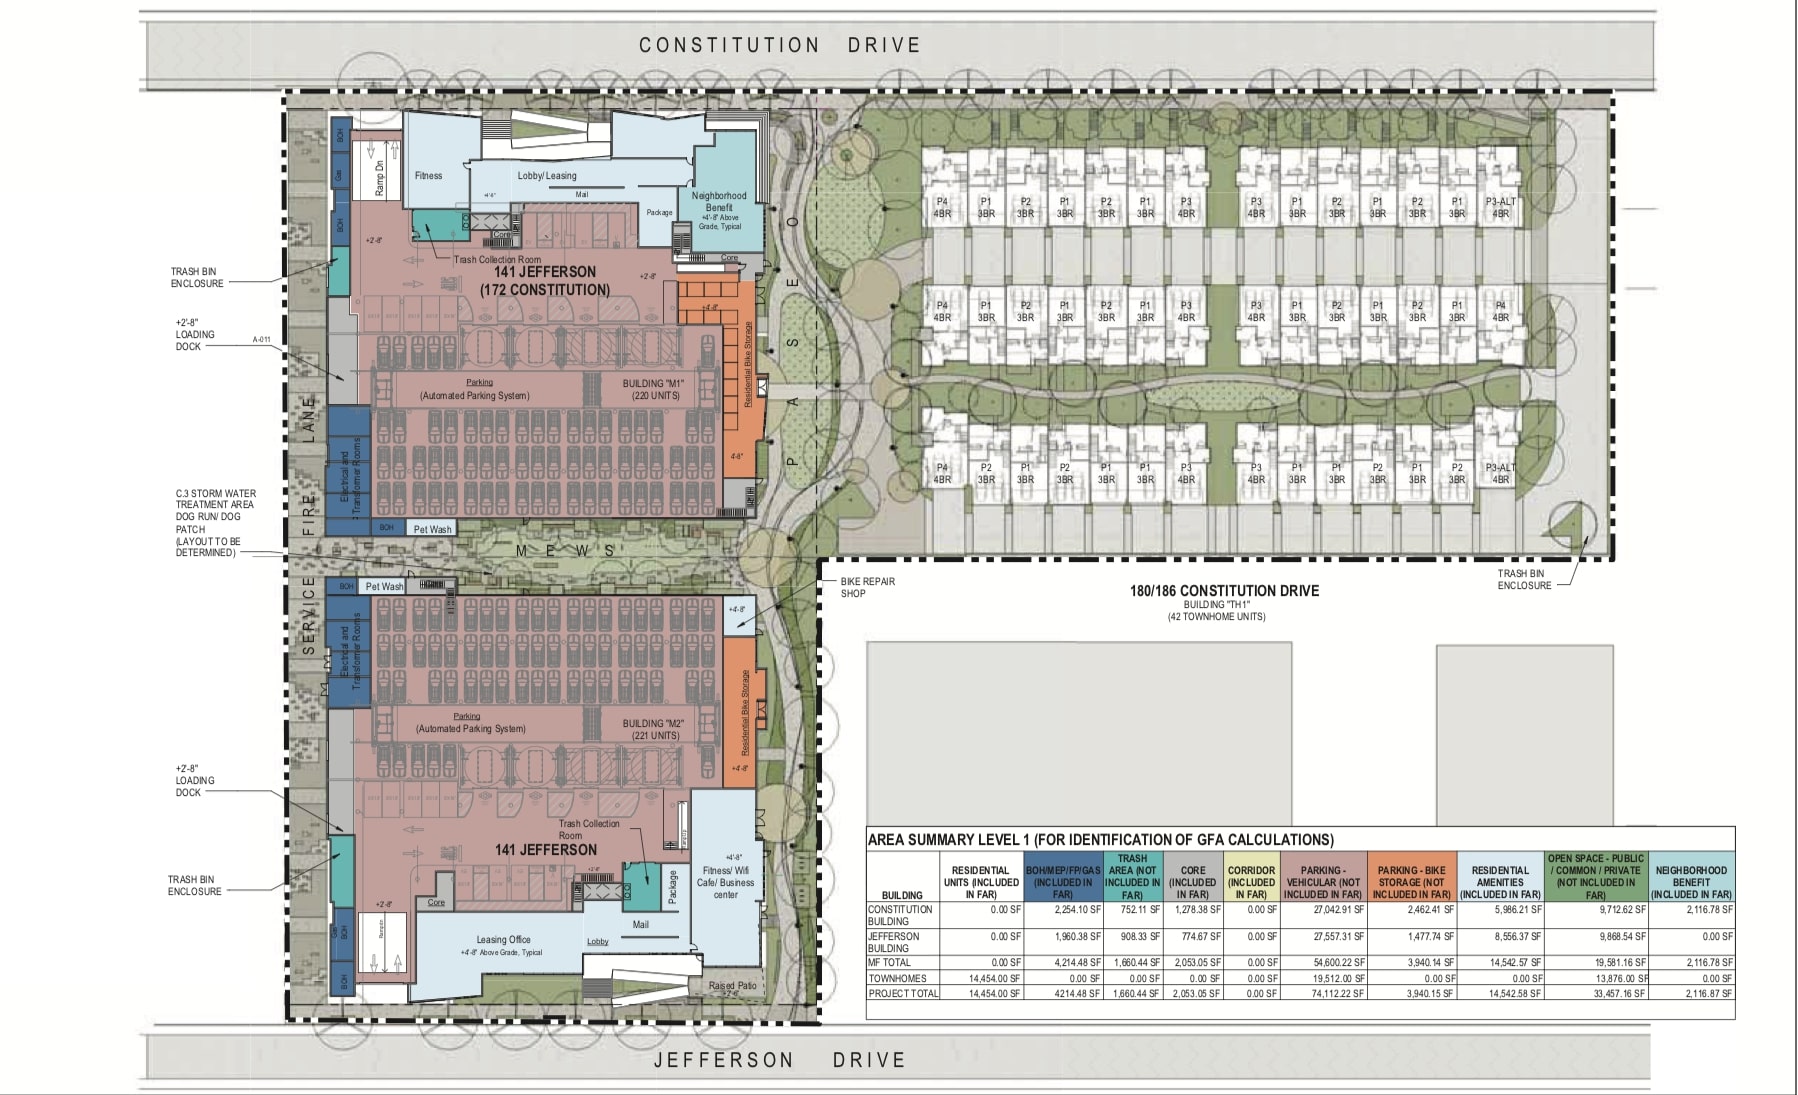 Ground Level Site Plan via via city planning documents